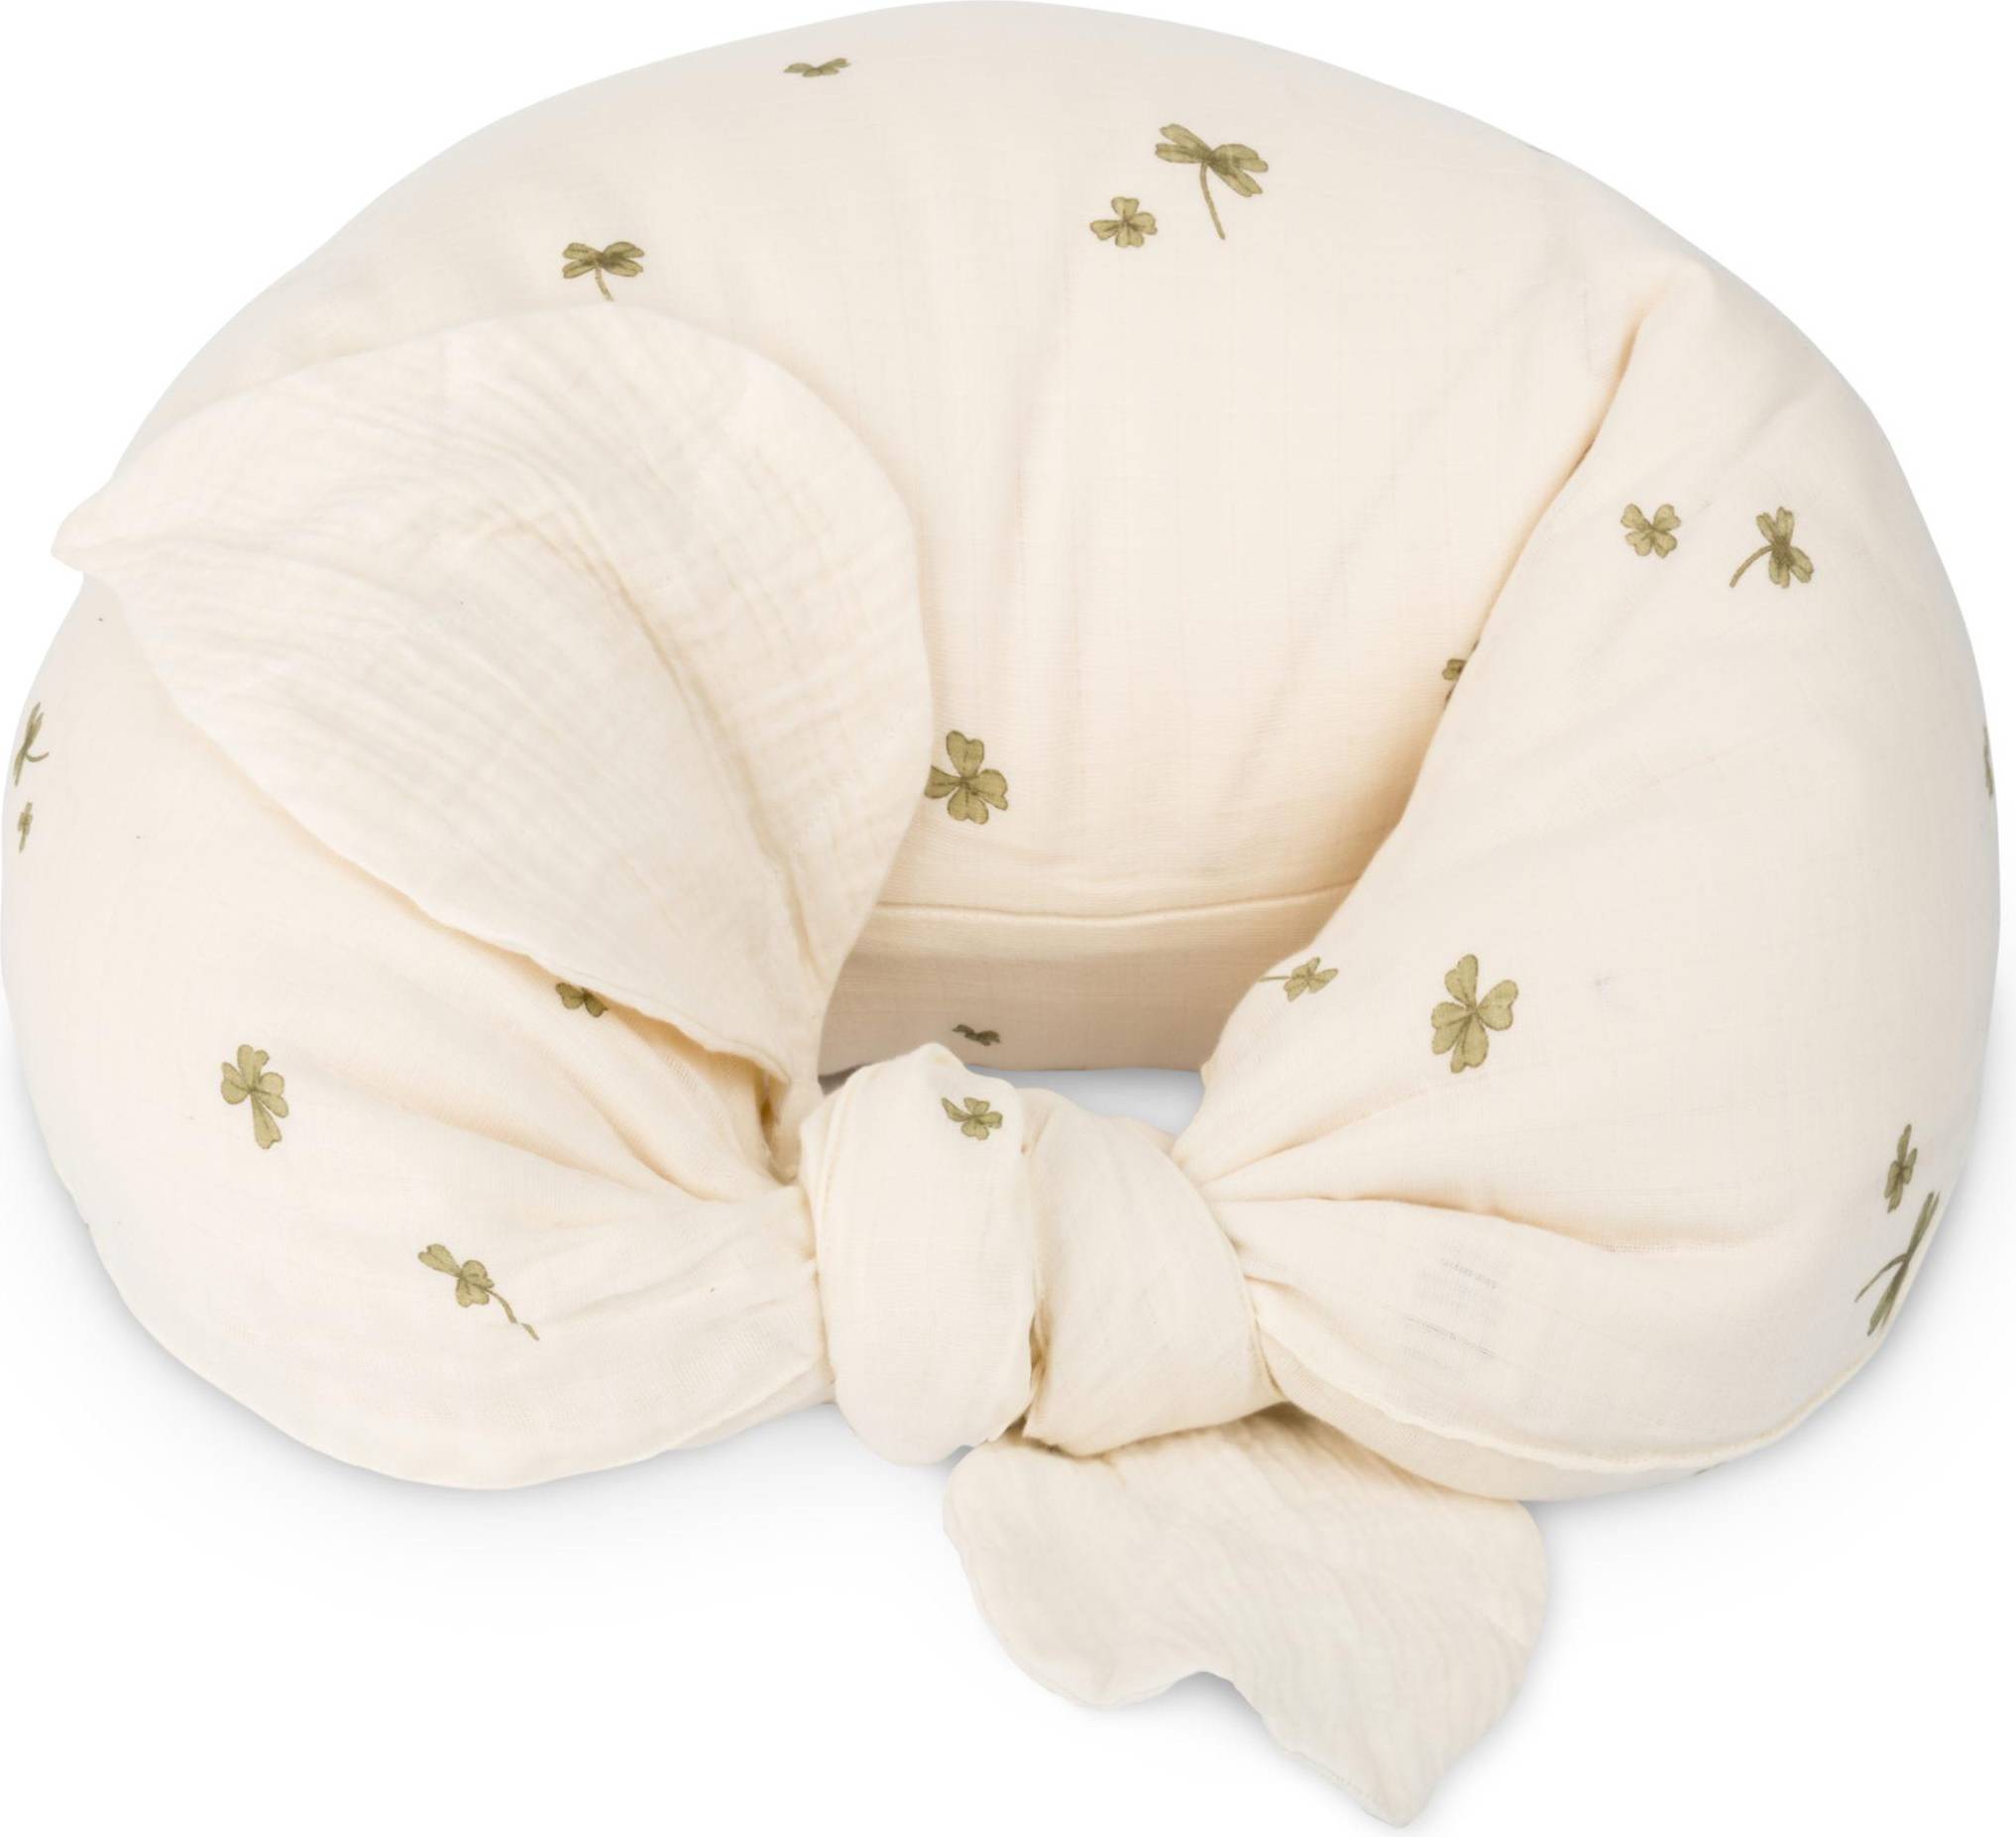  Bild på That's Mine Breastfeeding Pillow Clover Meadow amningskudde